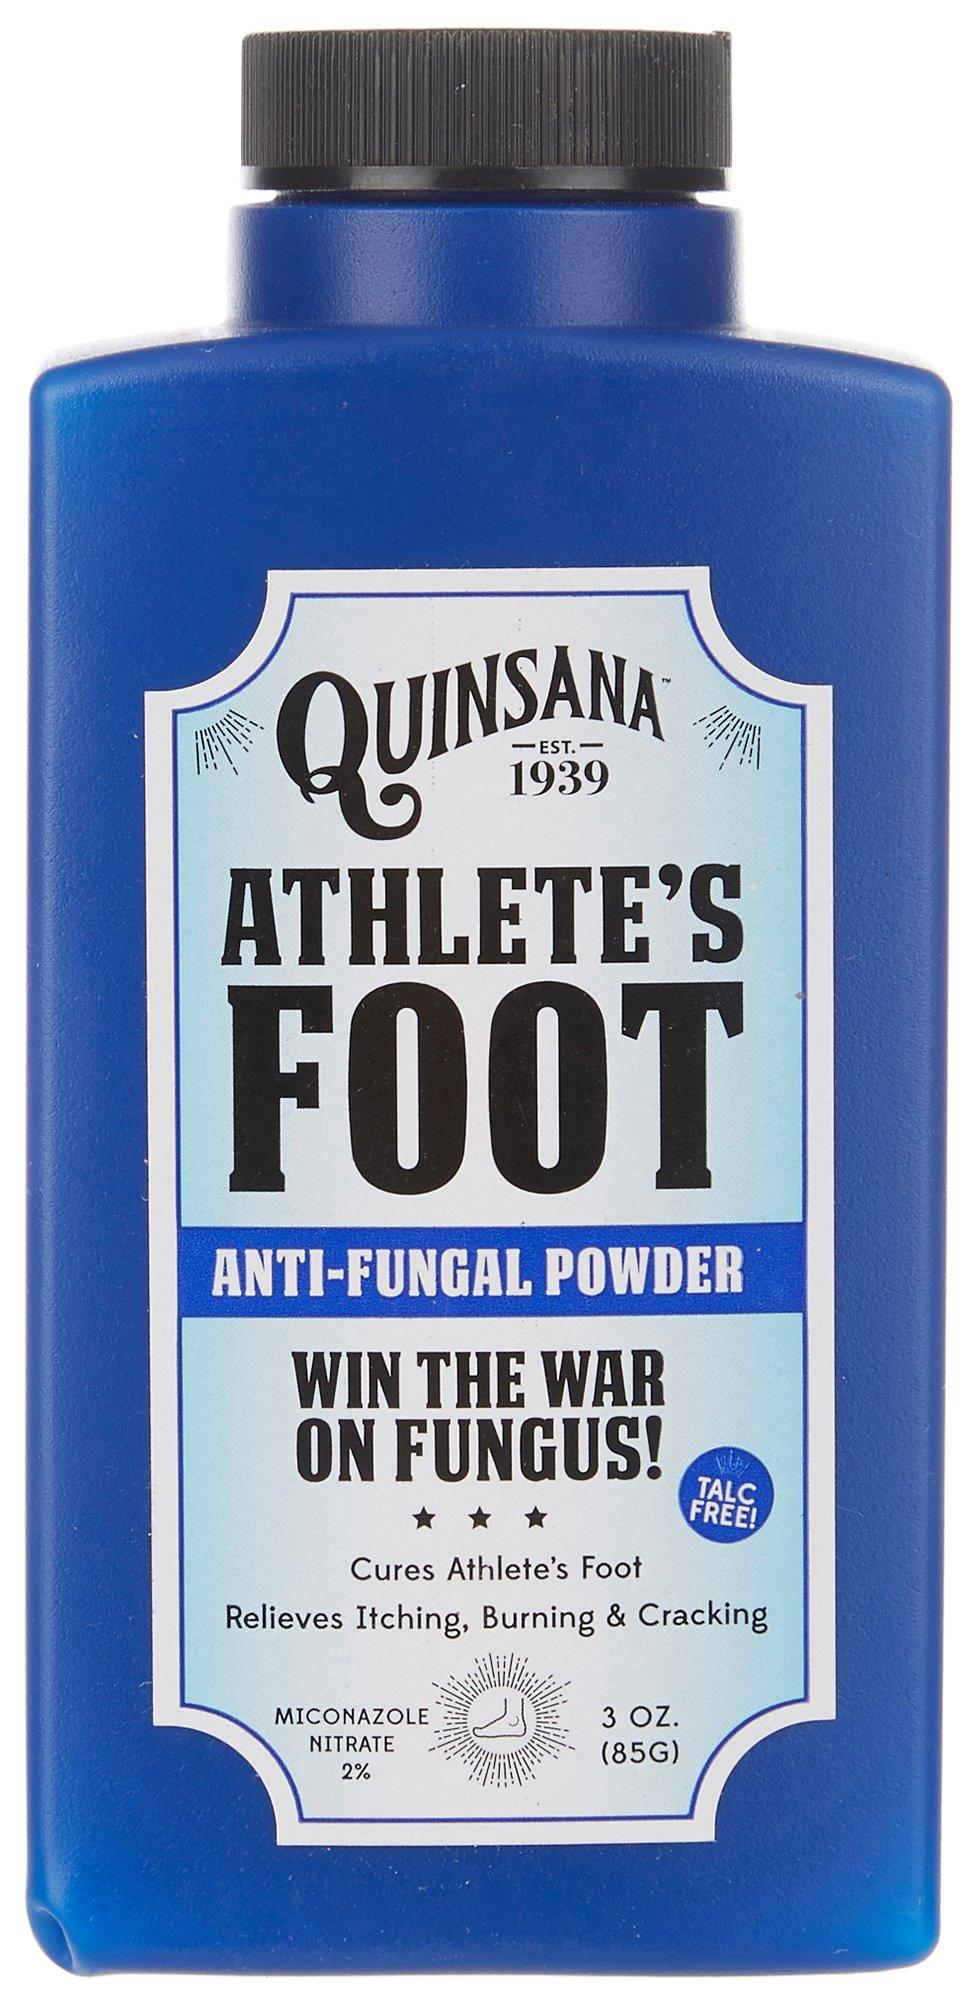 3 Oz. Quinsana Athlete's Foot Anti-Fungal Powder